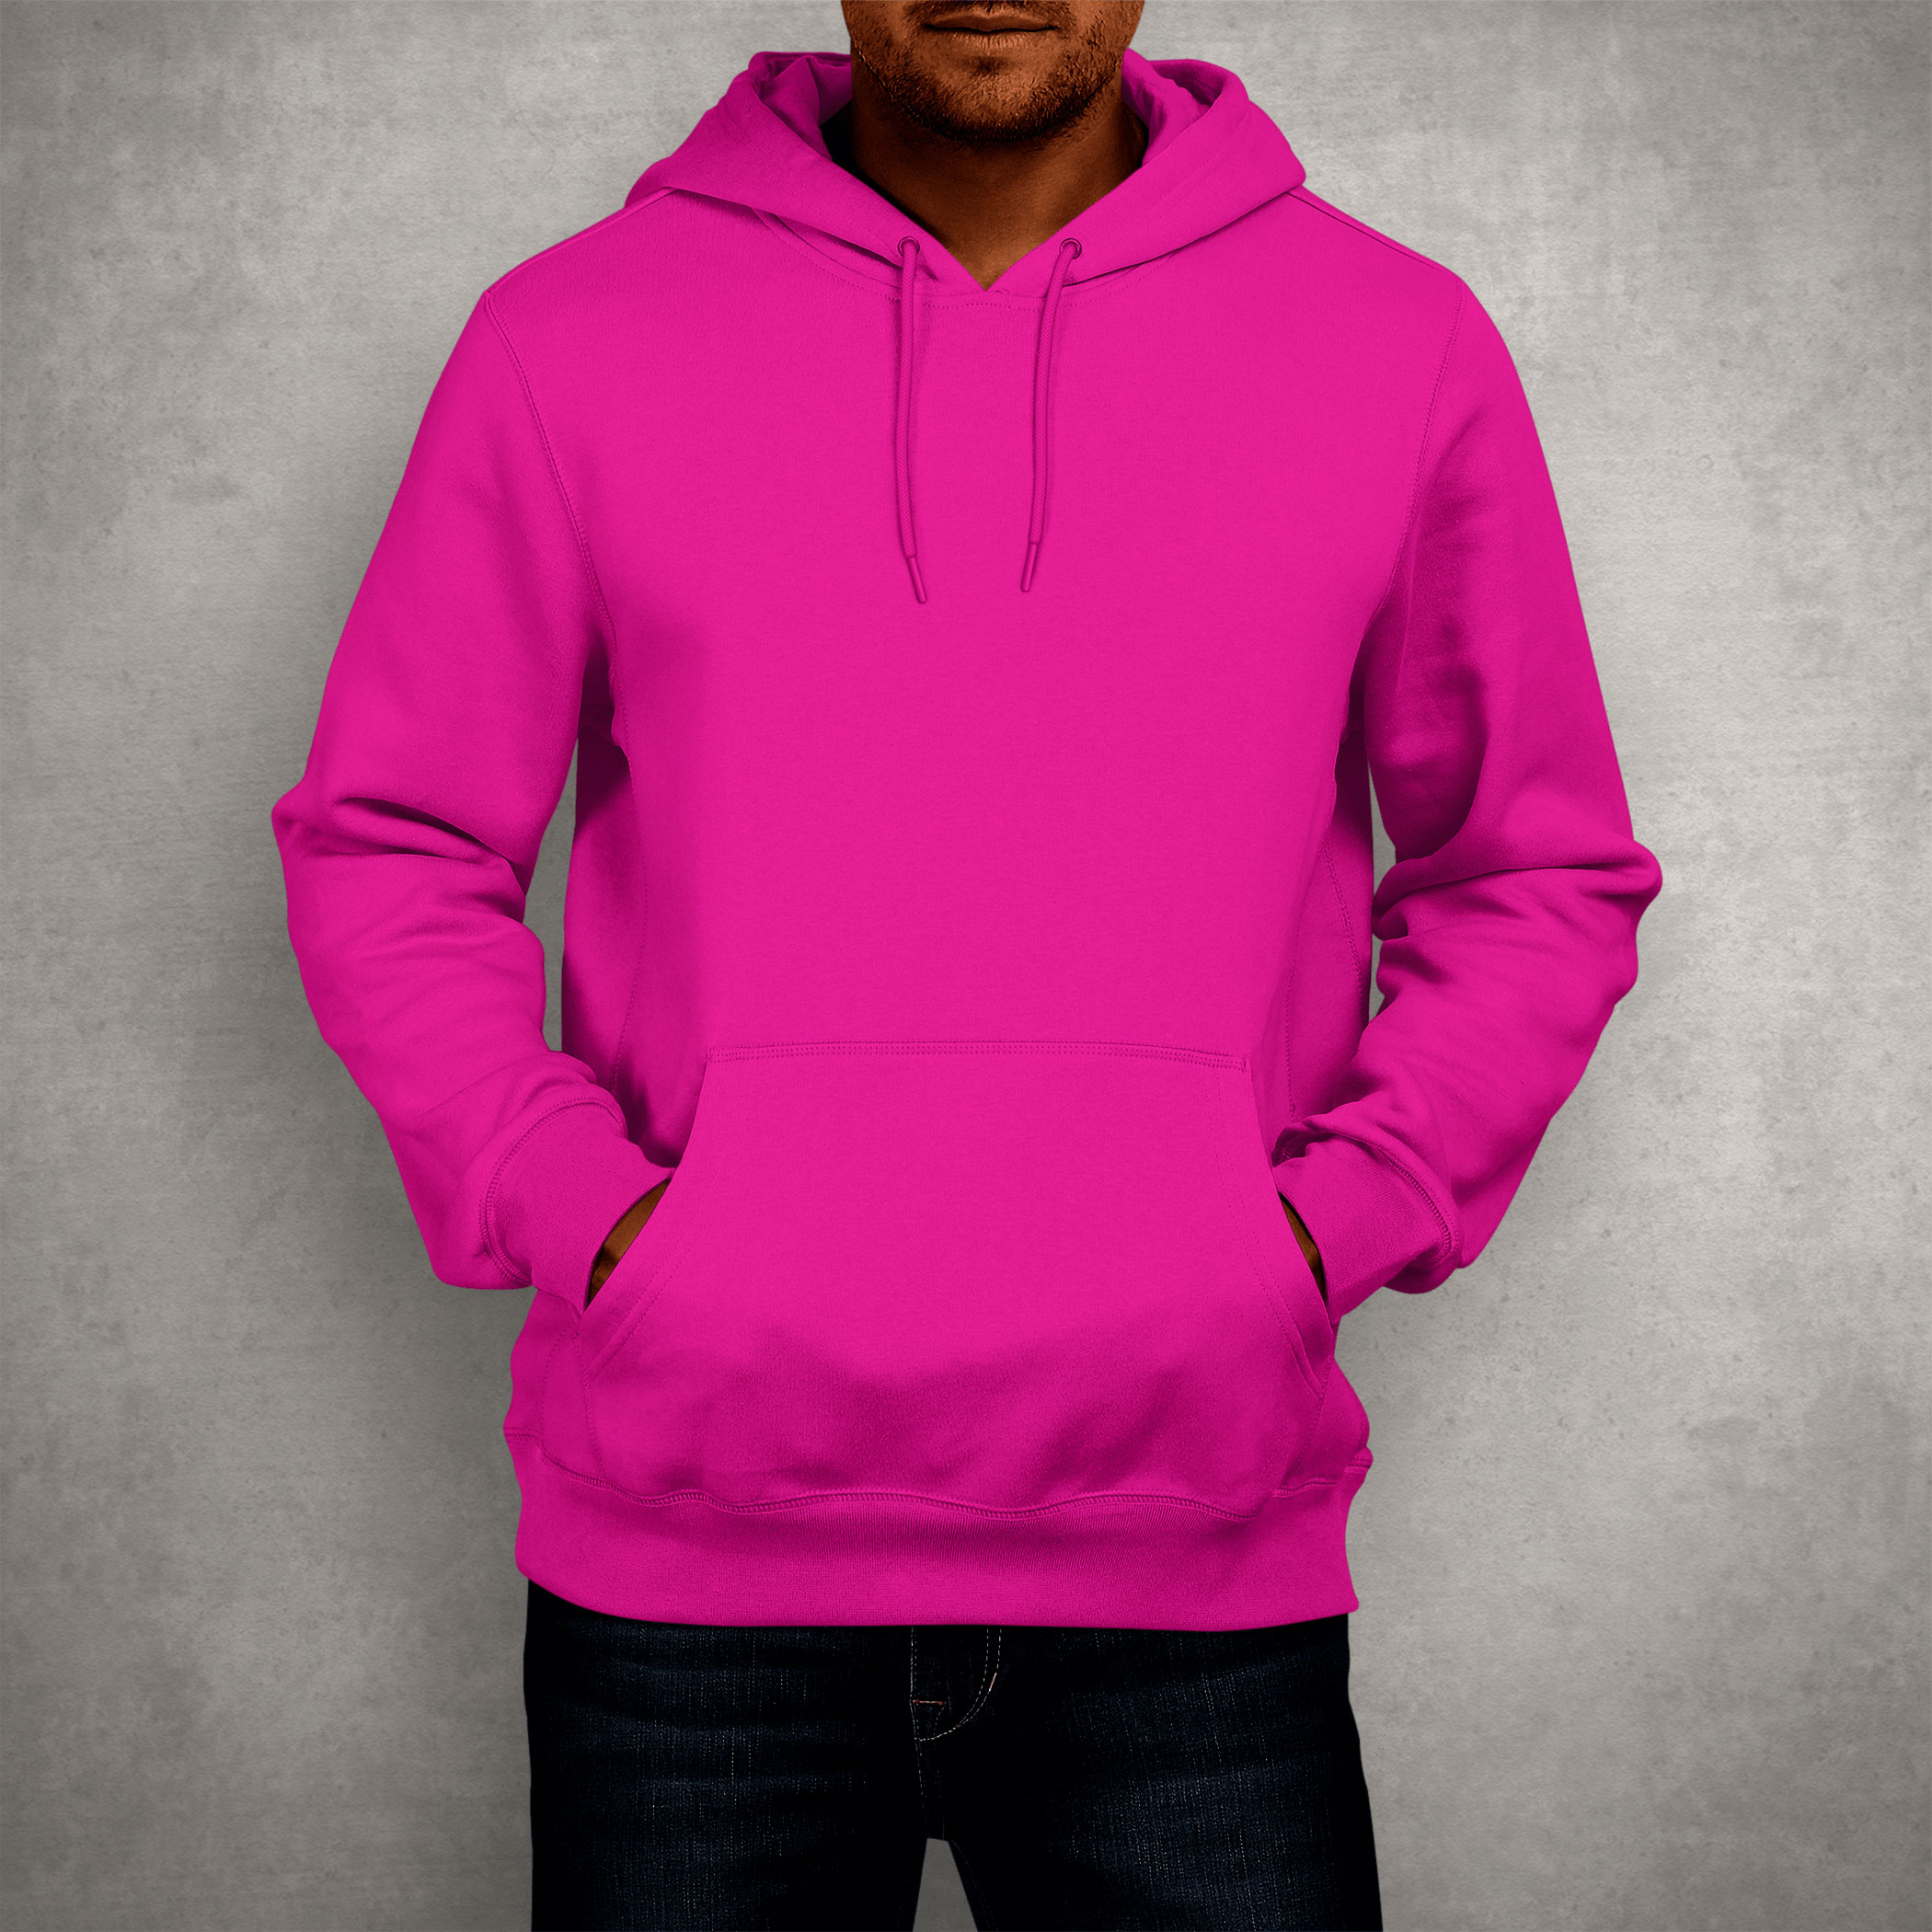 mens hot pink sweatshirt